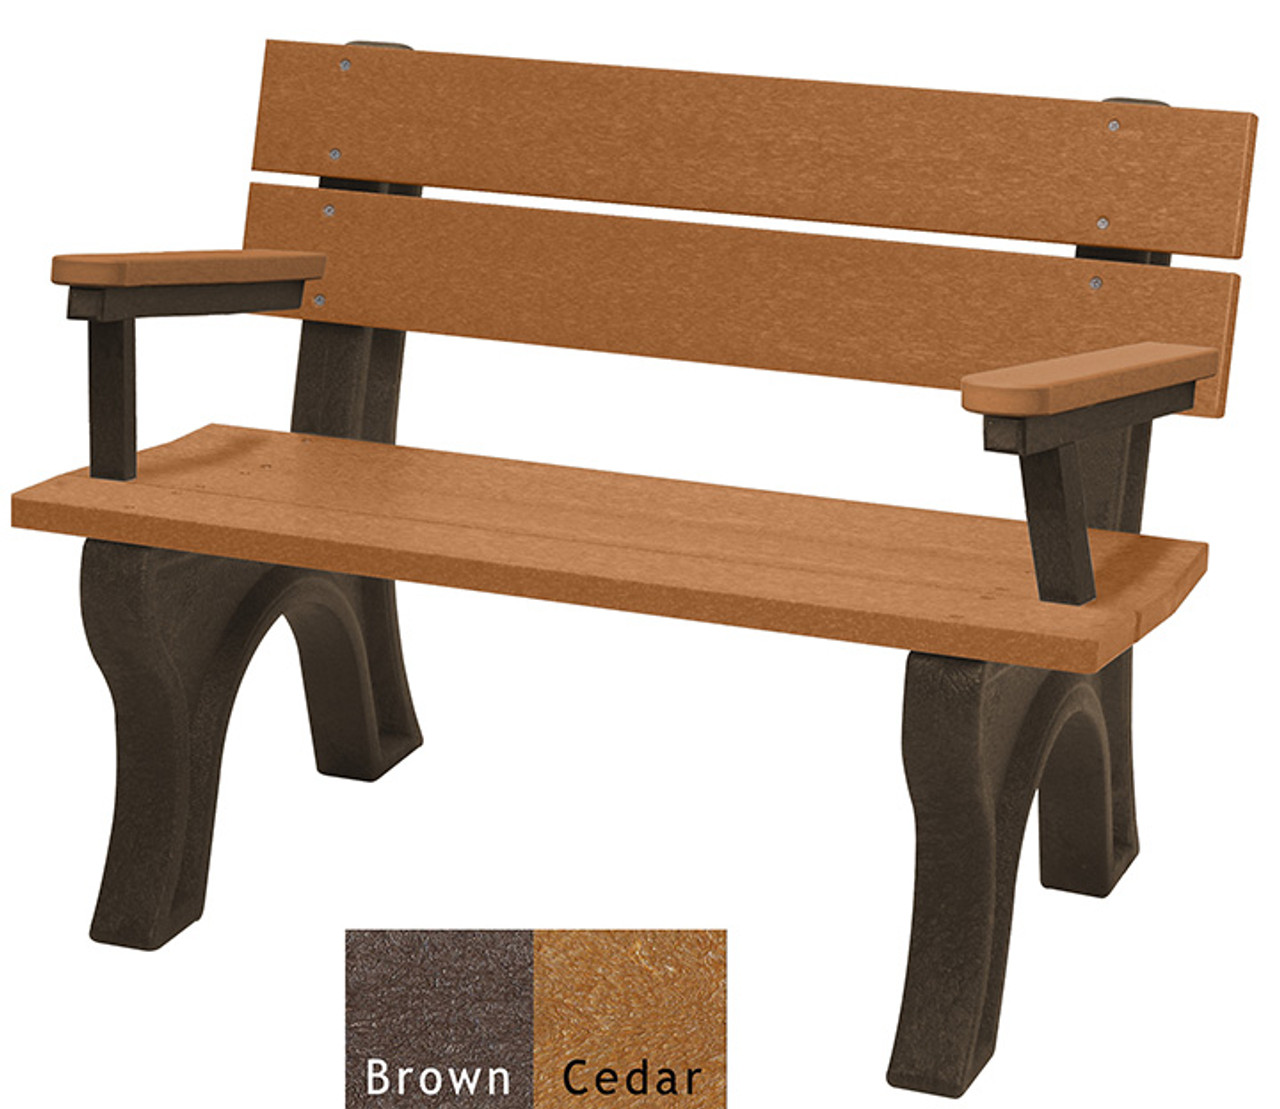 Brown and Cedar